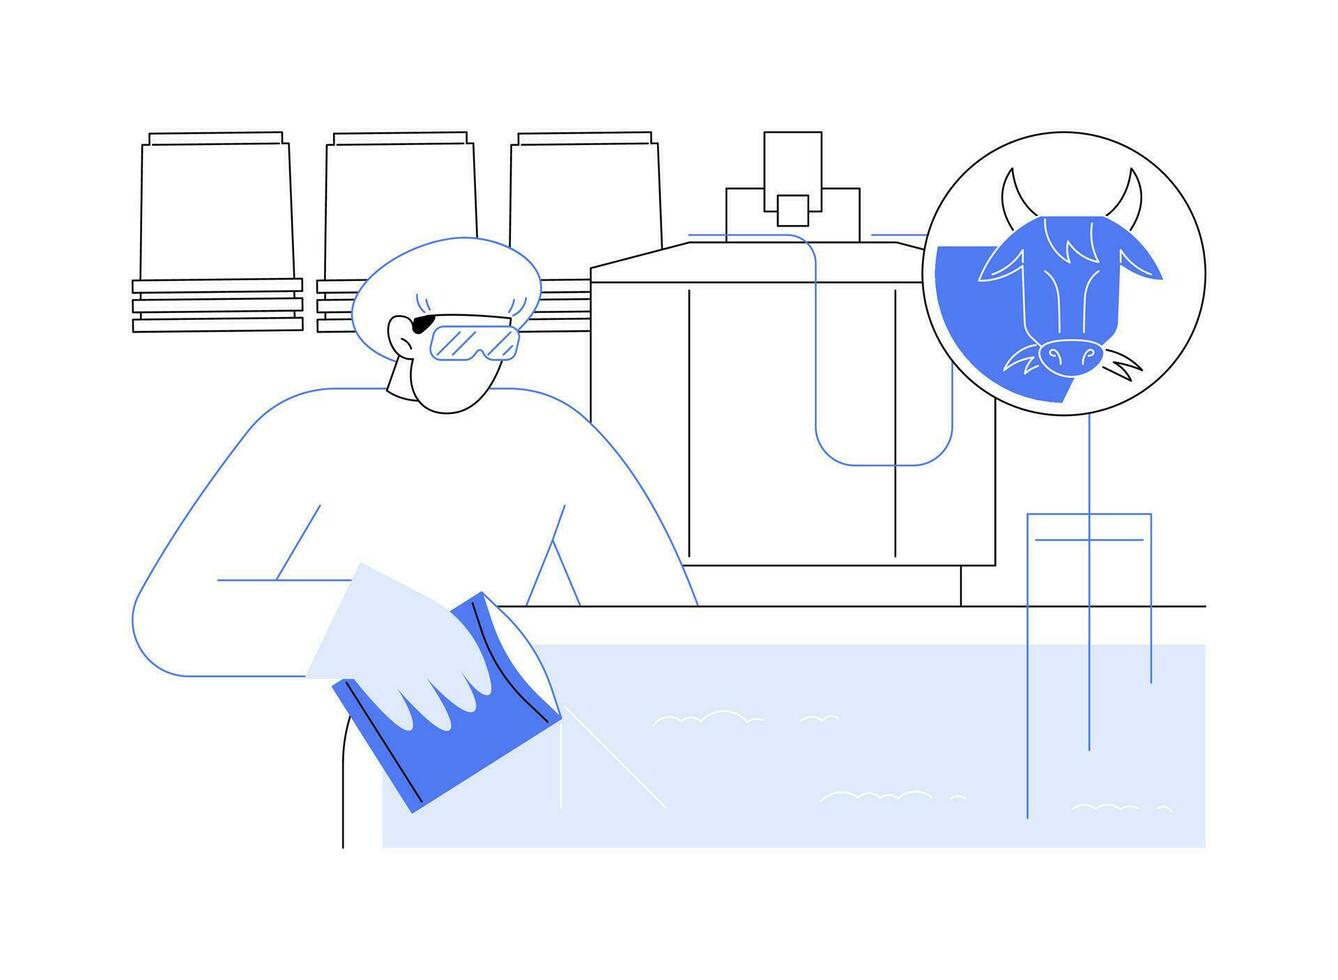 Milk inoculation abstract concept vector illustration.